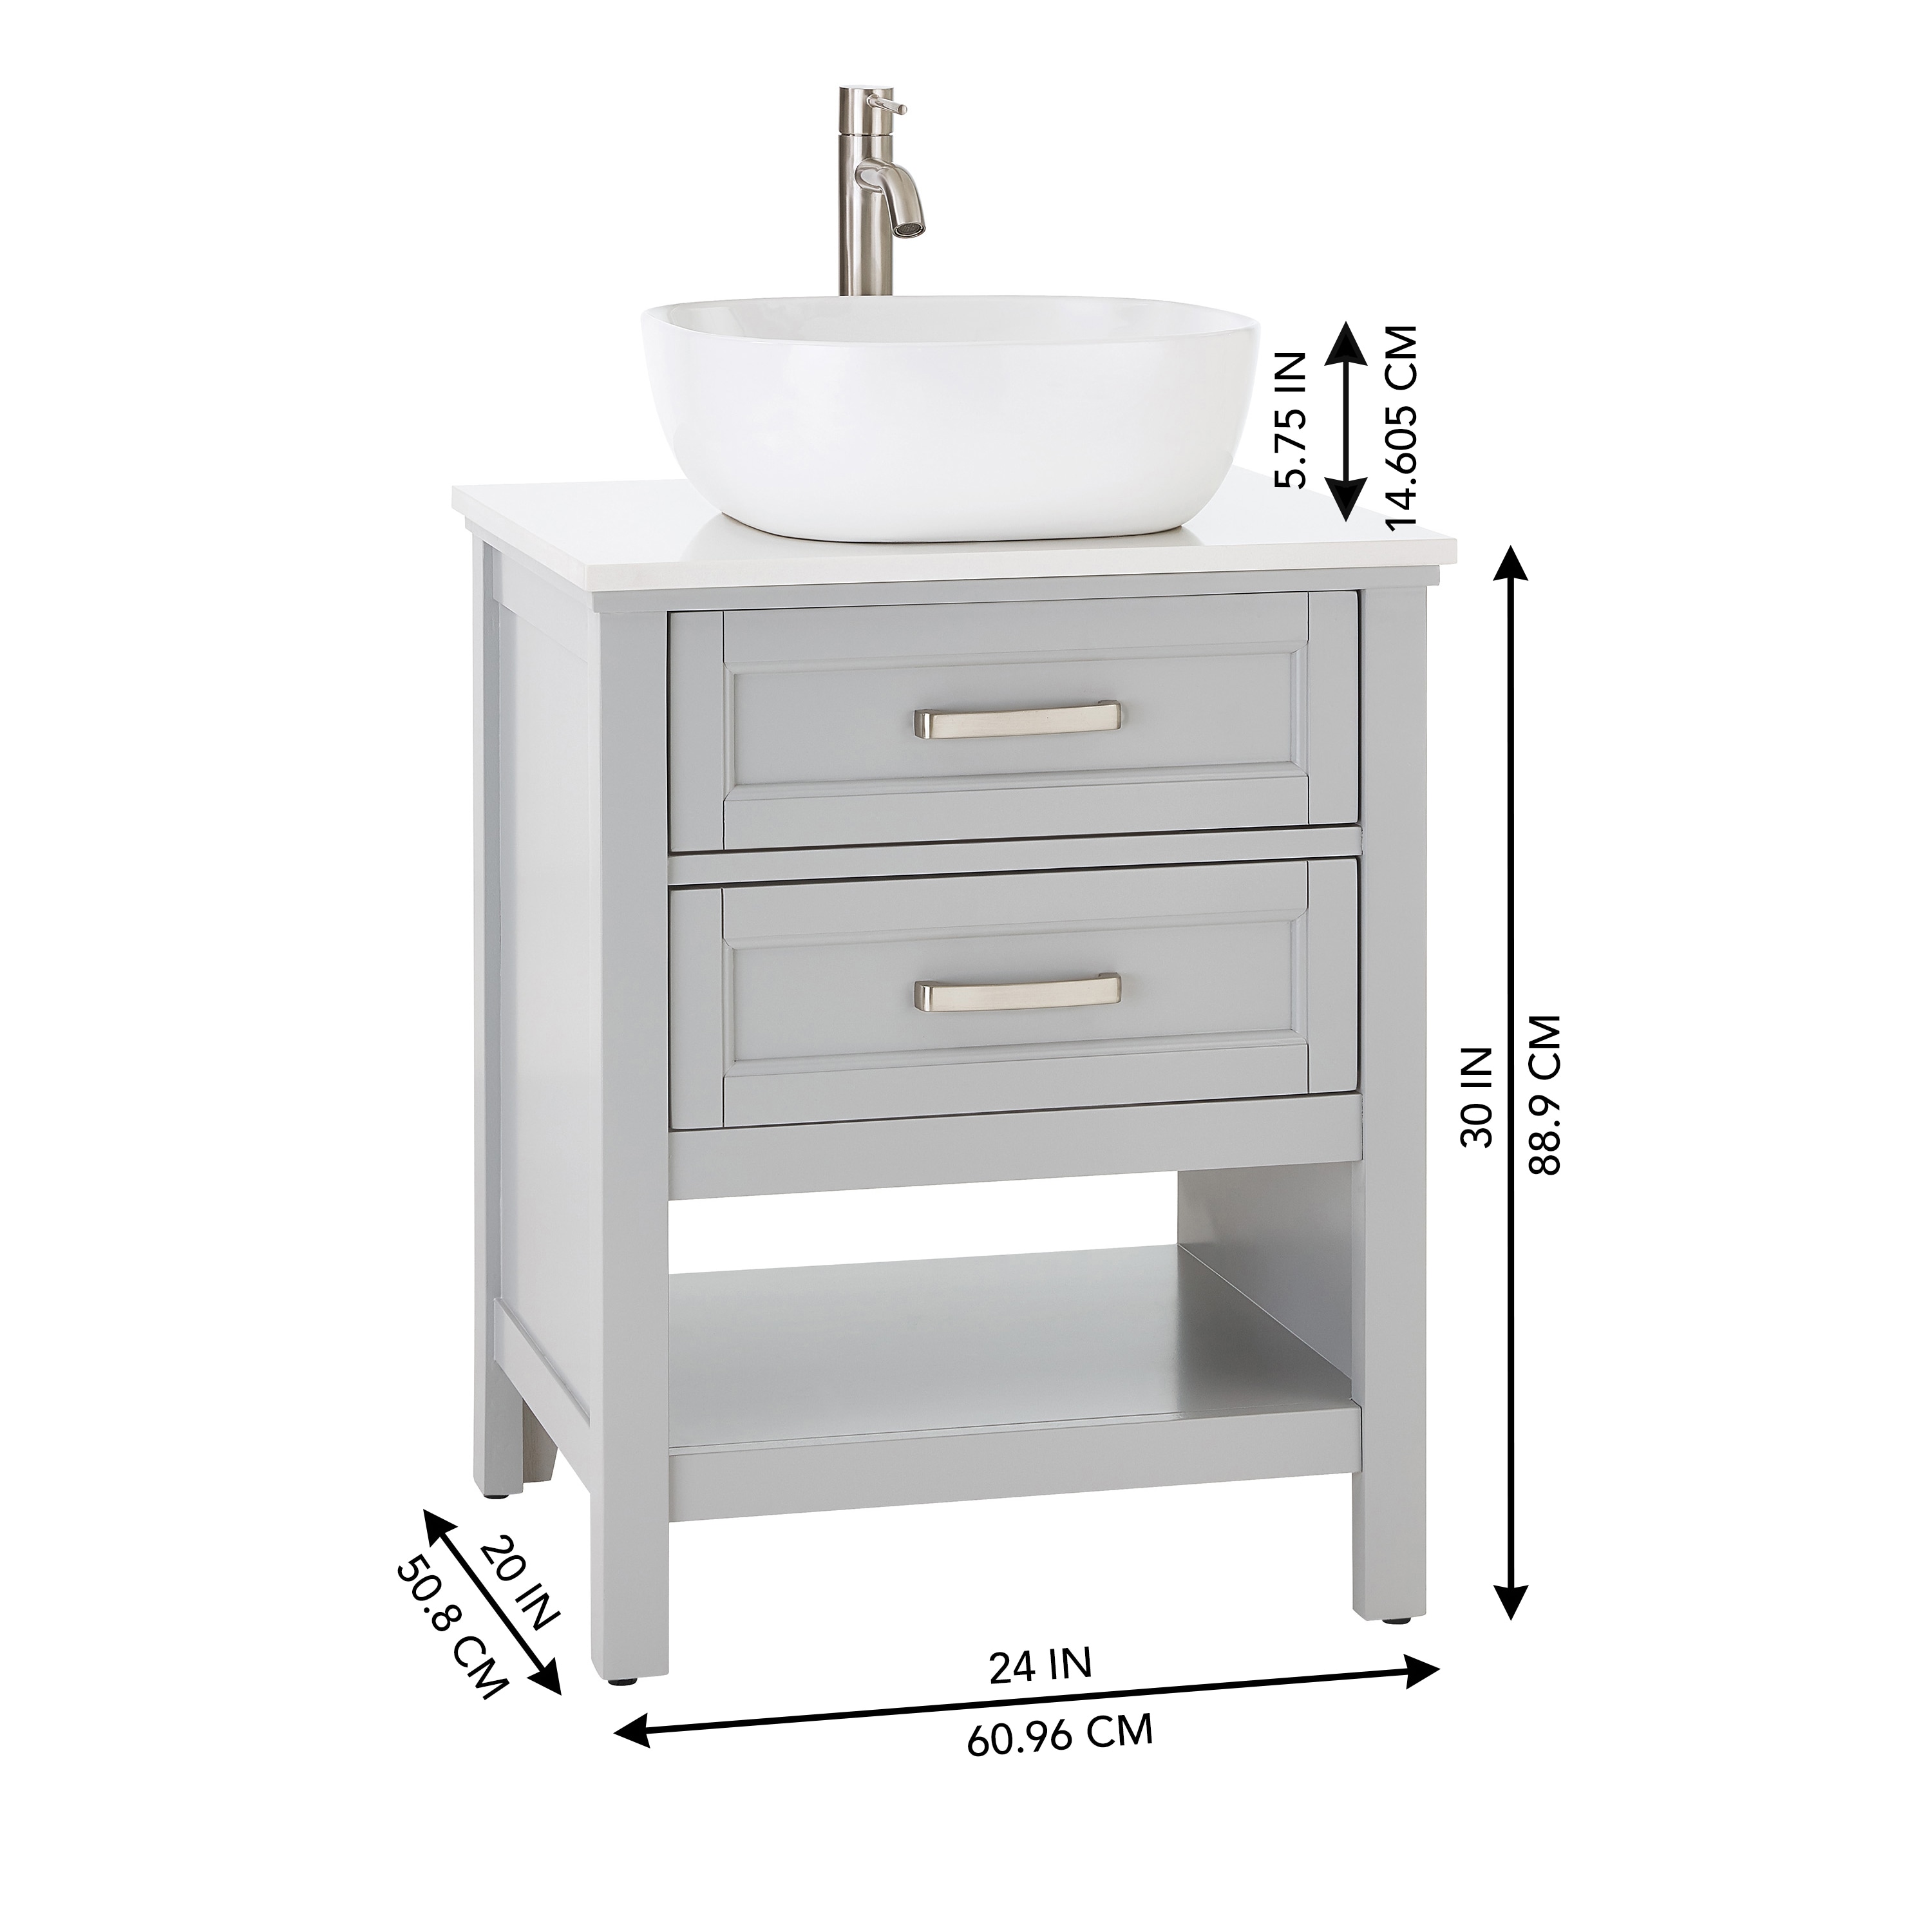 Light Gray Single Sink Bathroom Vanity, 24 Inch Vanity Cabinet For Vessel Sink